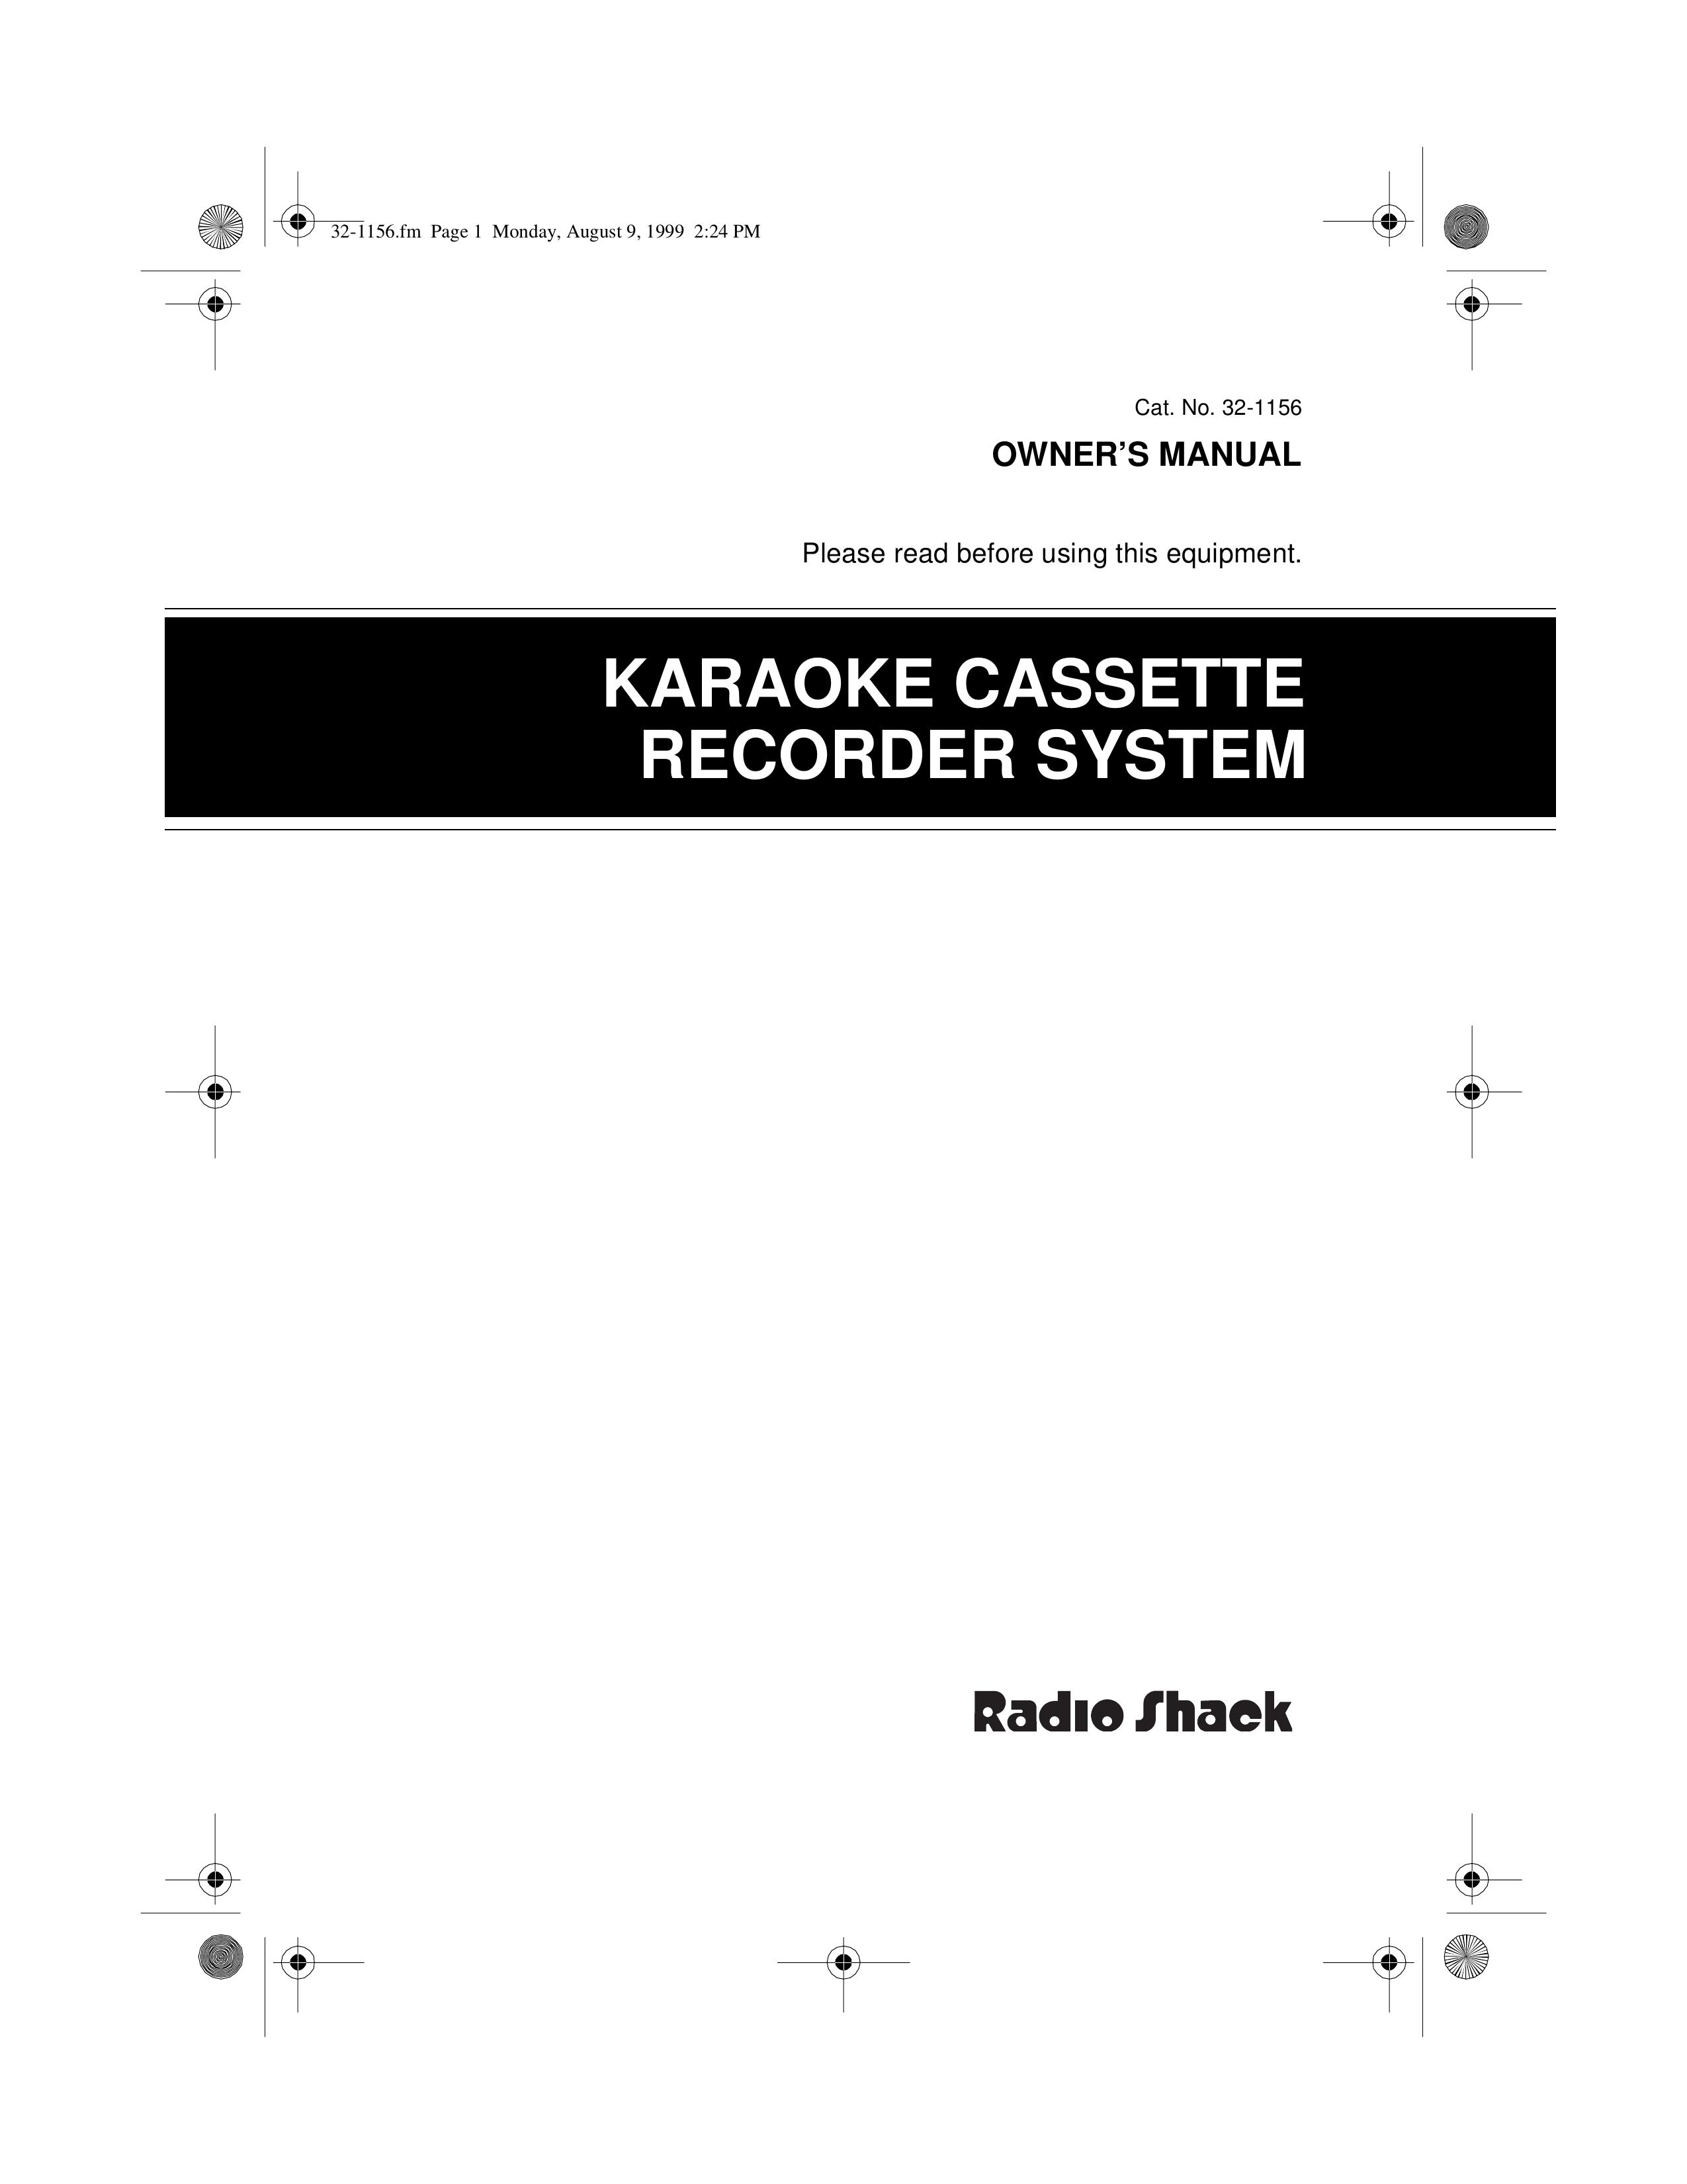 Radio Shack 32-1156 Karaoke Machine User Manual